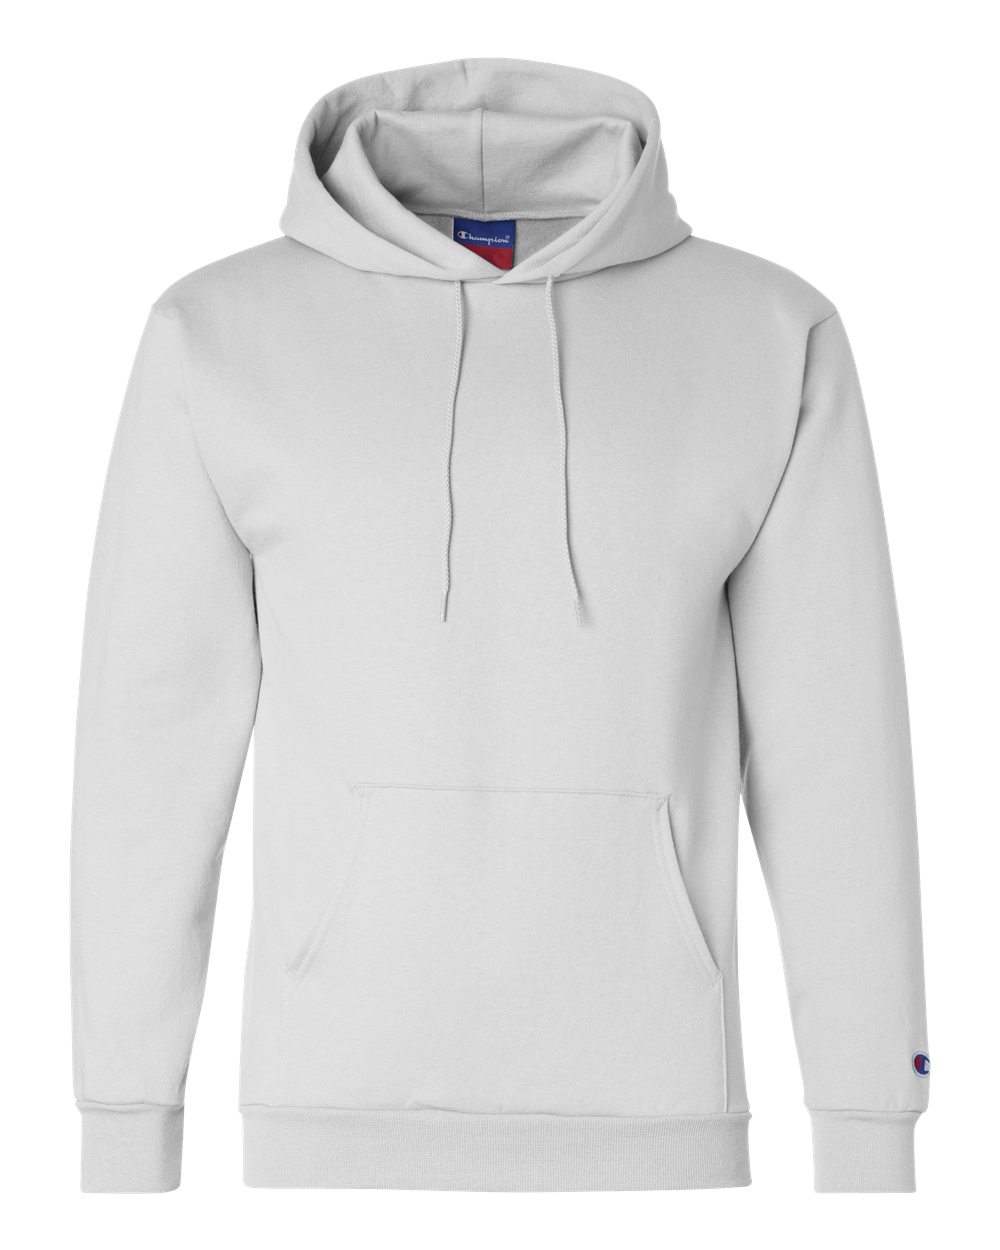 hvidløg Mange propel Powerblend® Hooded Sweatshirt - Champion S700 | Clothing Shop Online